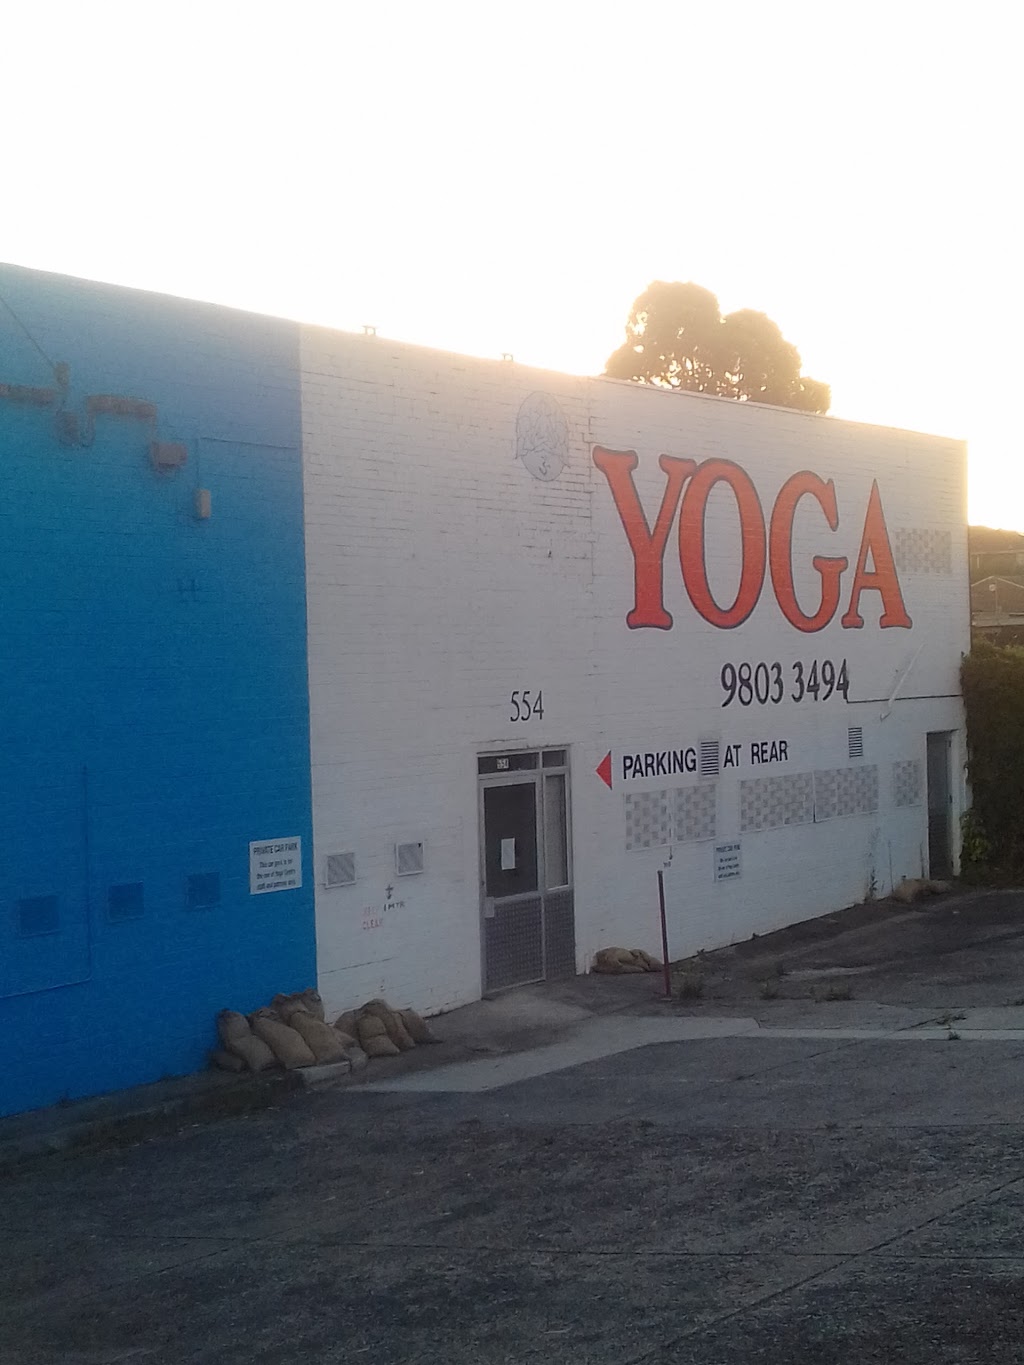 The Harmony School of Yoga | gym | 1/554 High St Rd, Mount Waverley VIC 3149, Australia | 0398033494 OR +61 3 9803 3494